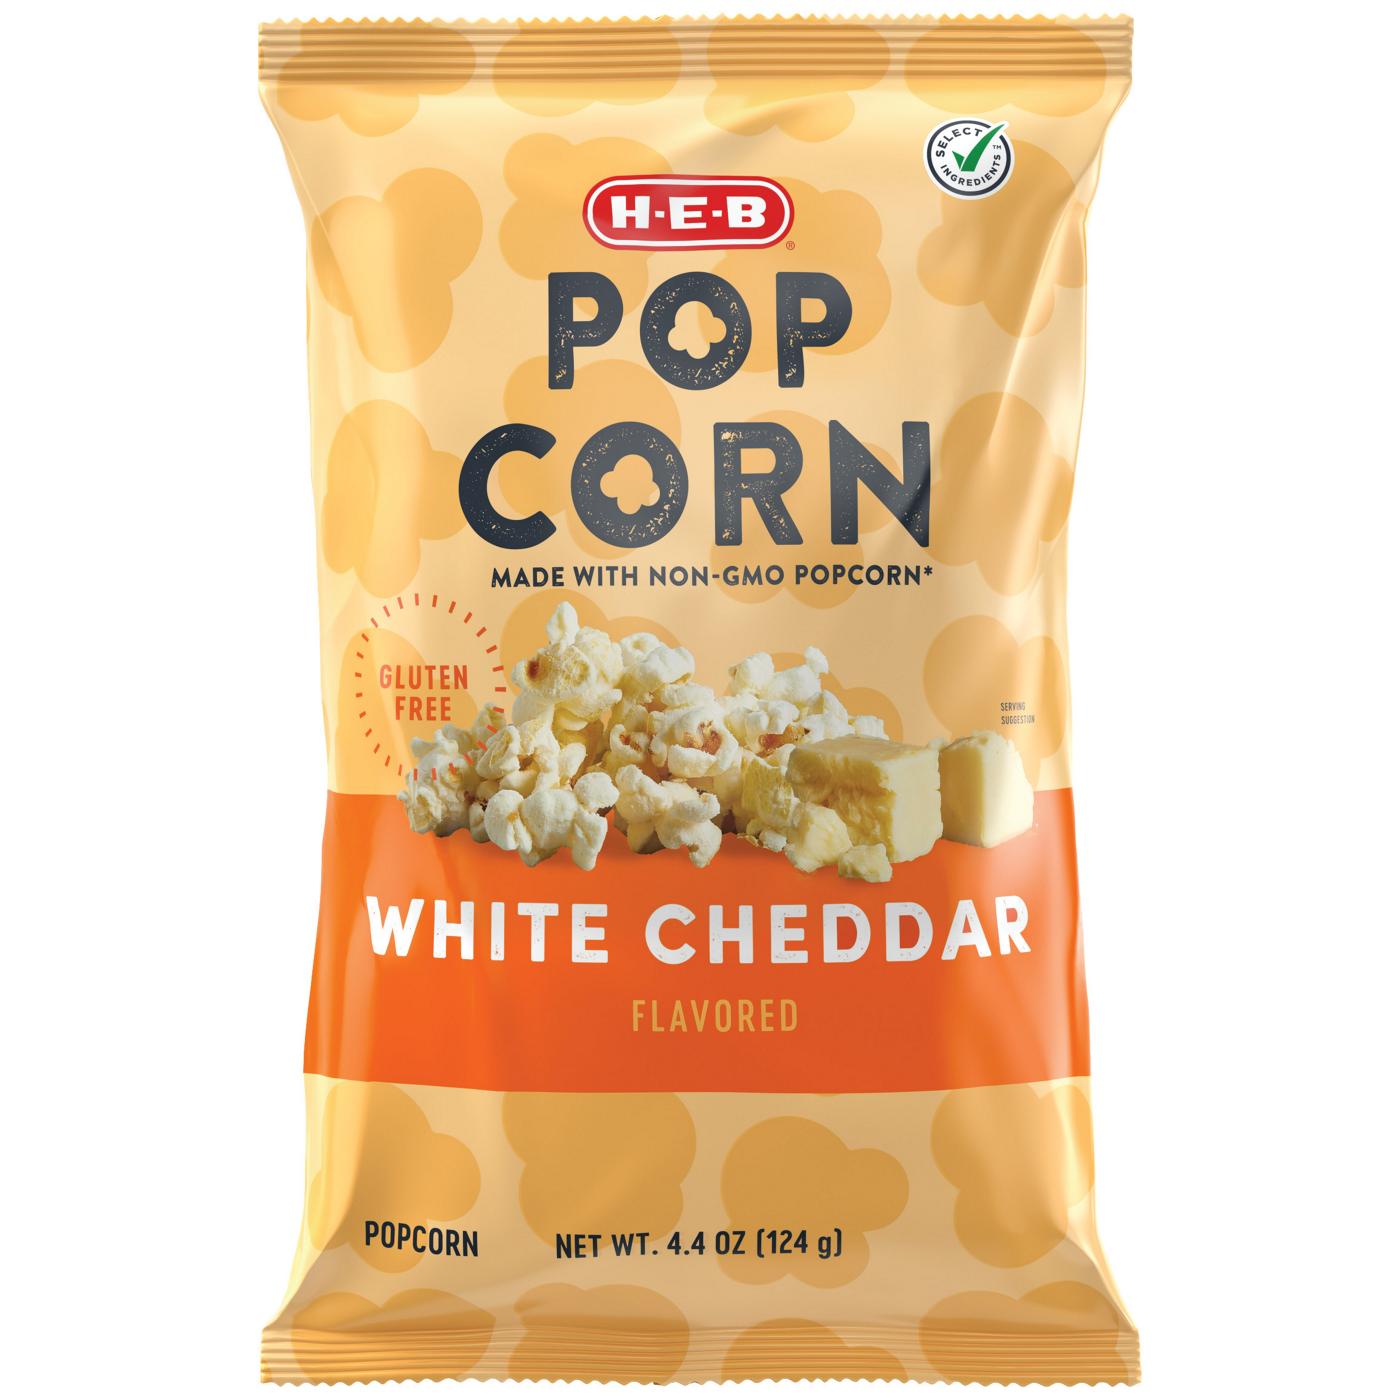 H-E-B Popcorn - White Cheddar; image 1 of 2